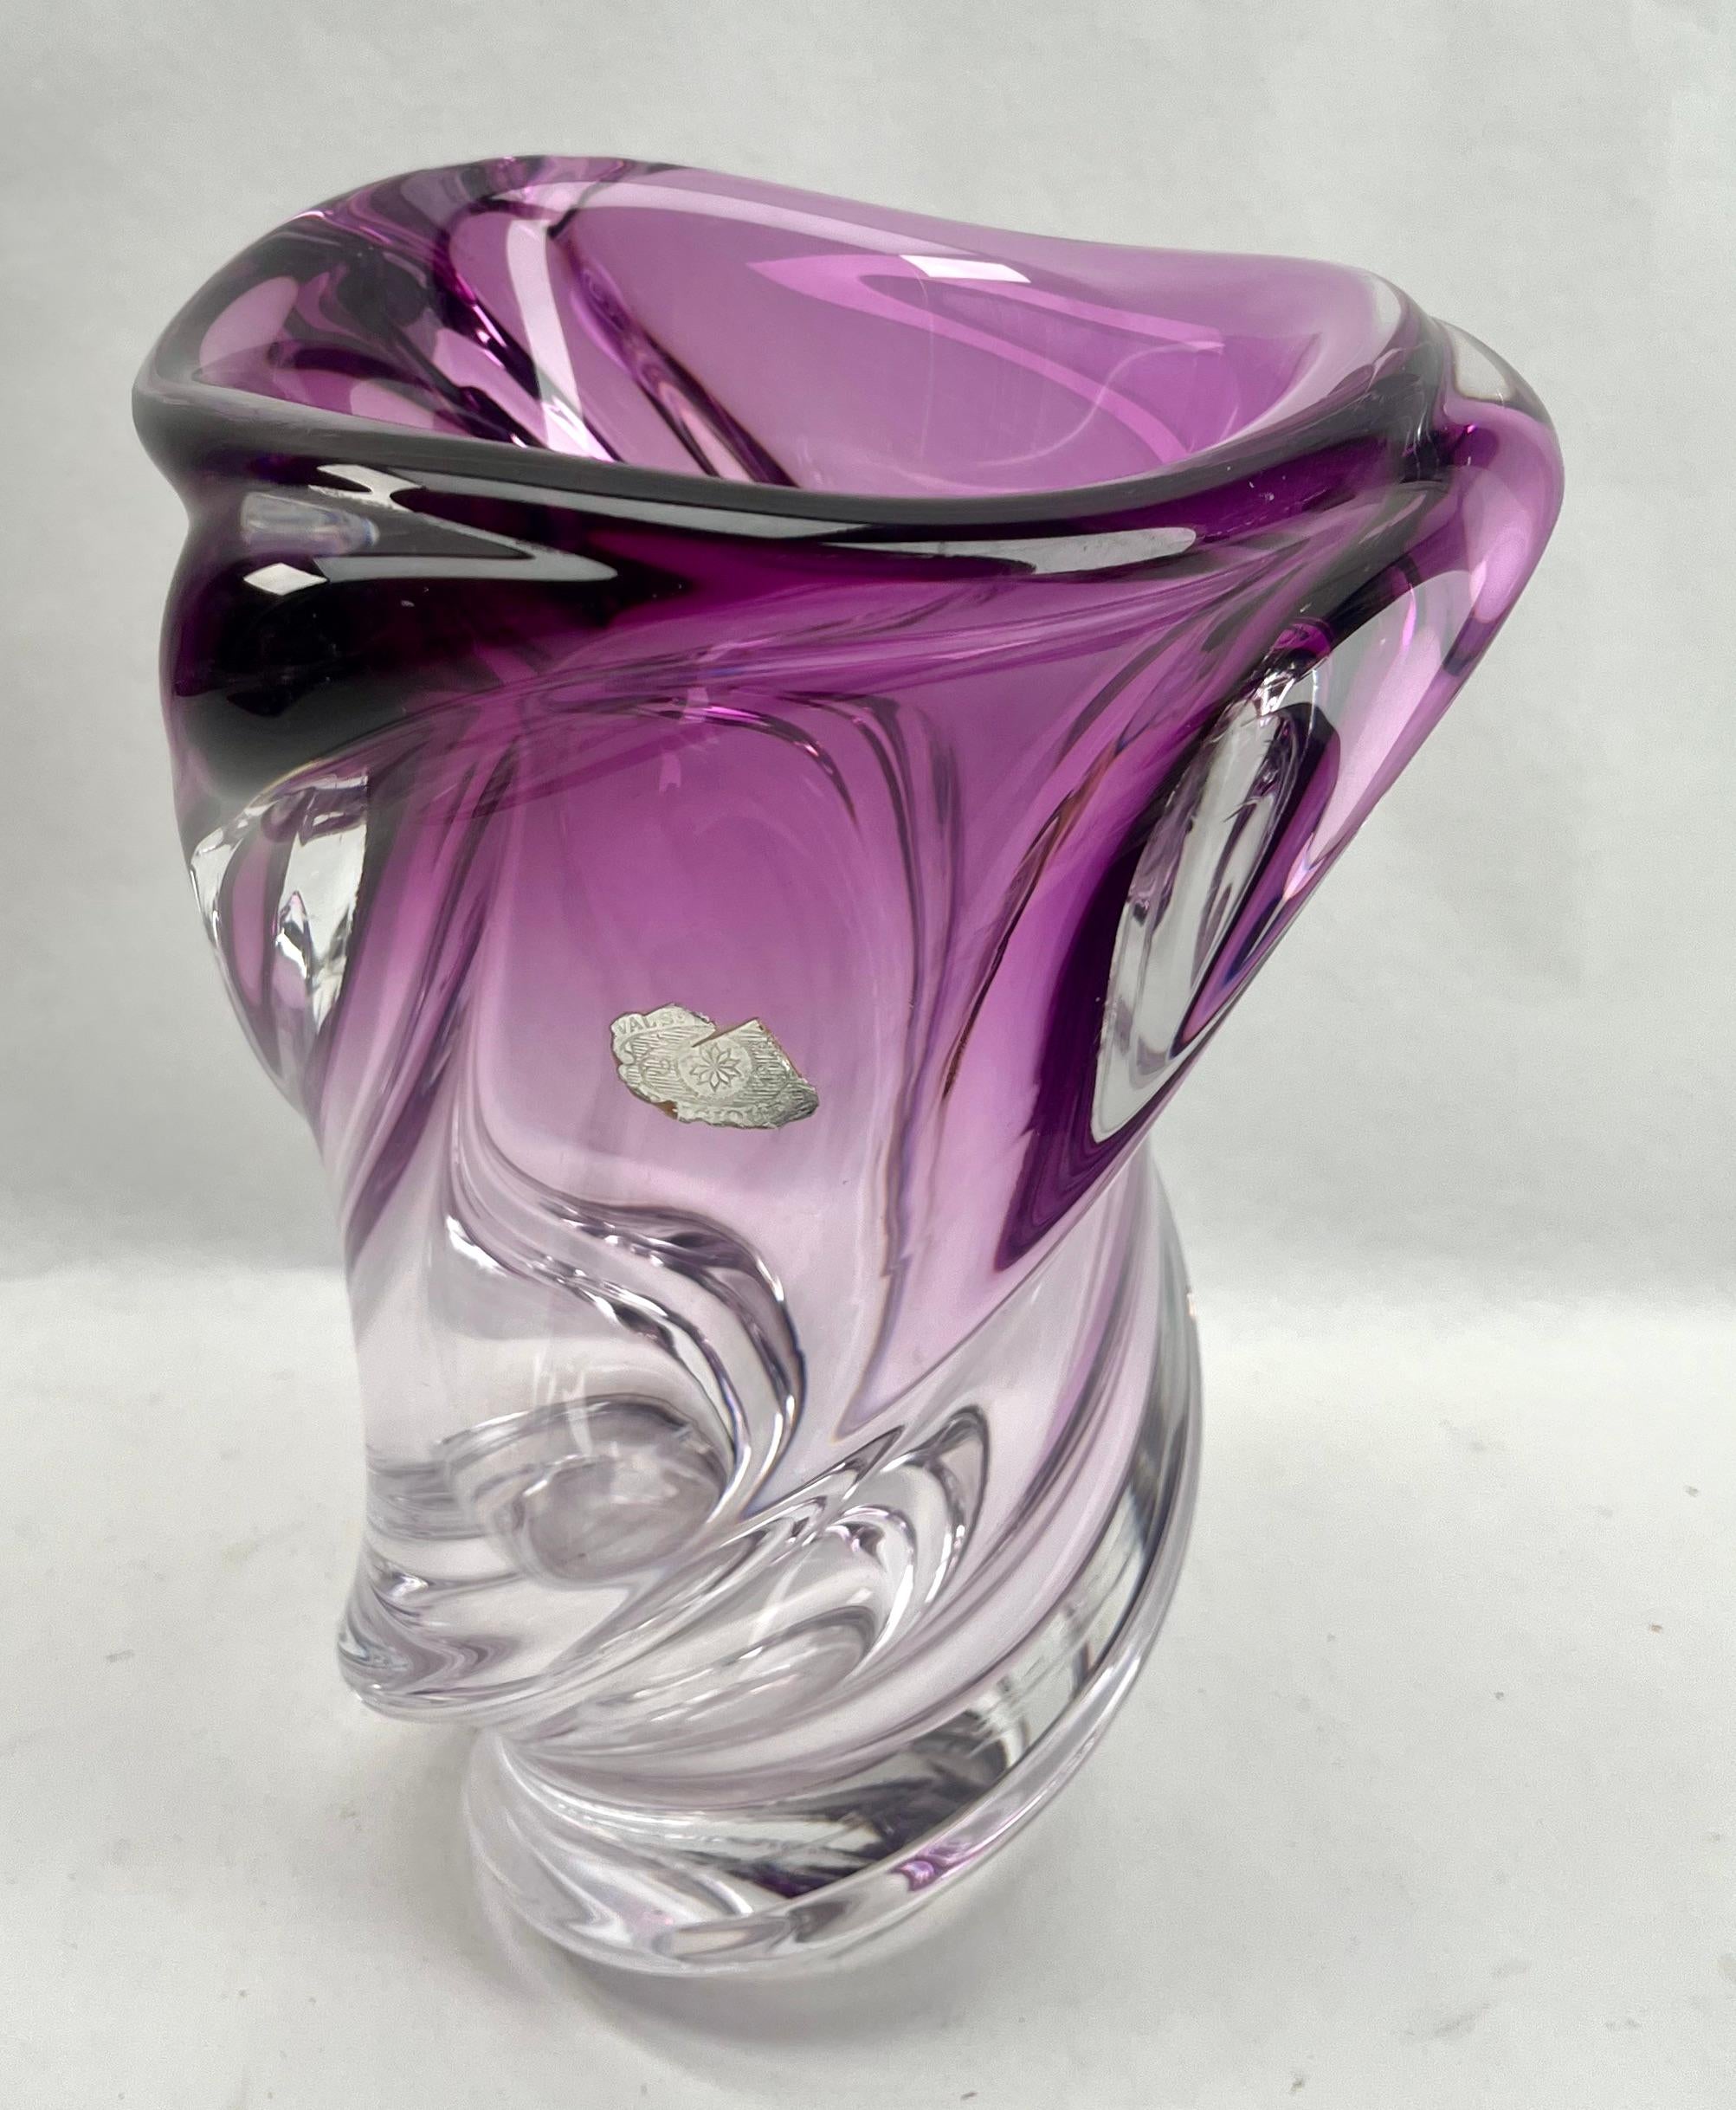 Belgian Val Saint Lambert Label Sculpted Crystal Vase with Sommerso Core, Belgium